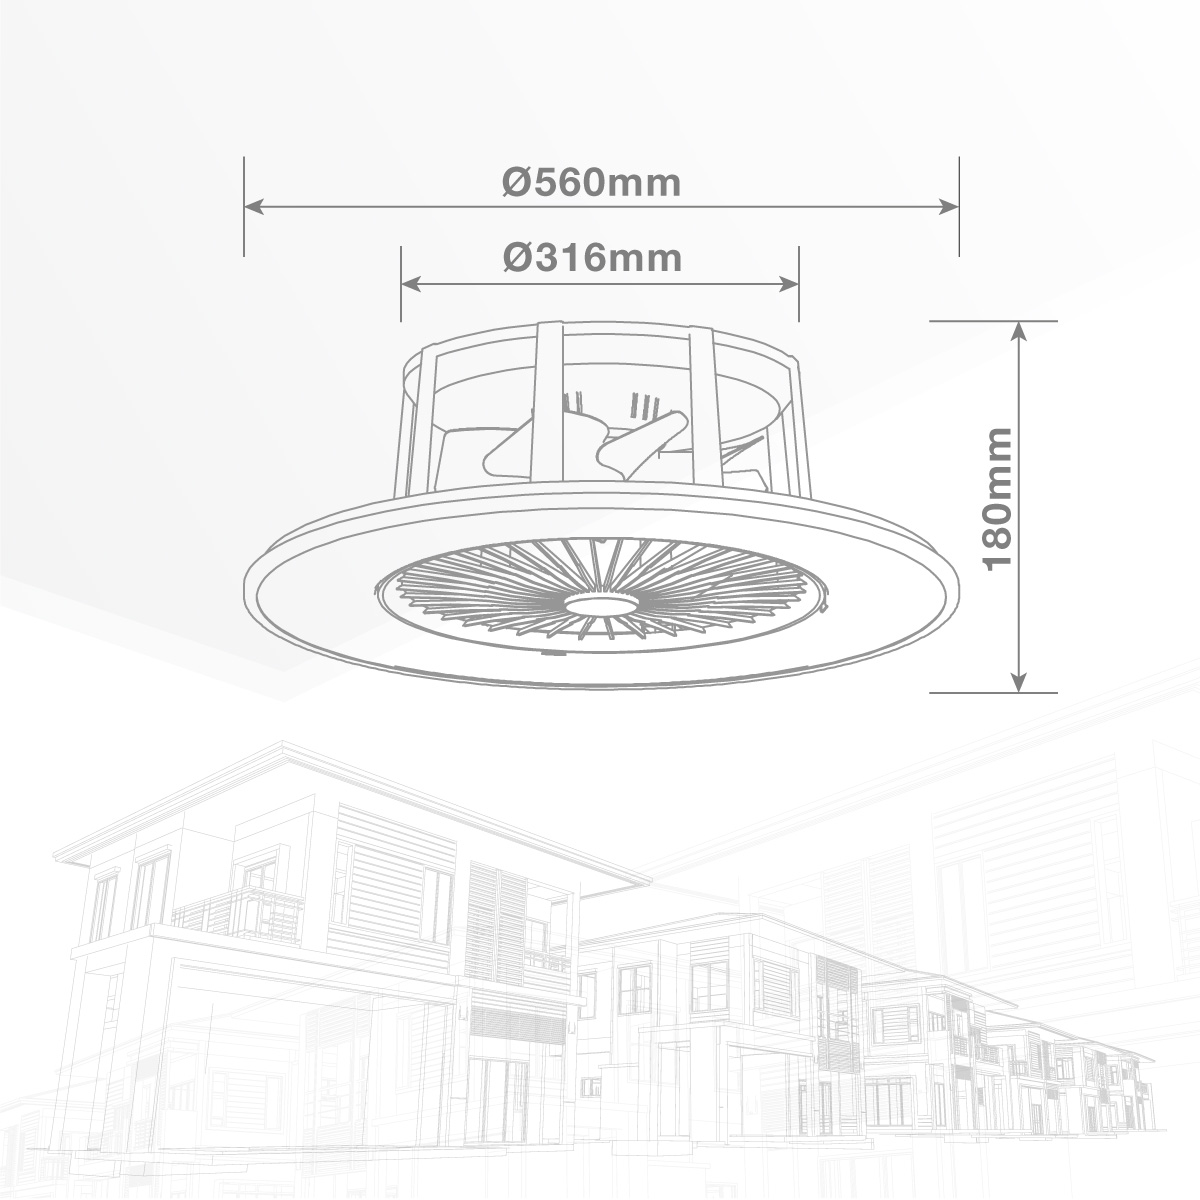 Ventilador de techo Box Fan con mando 22' CCT regulable Blanco